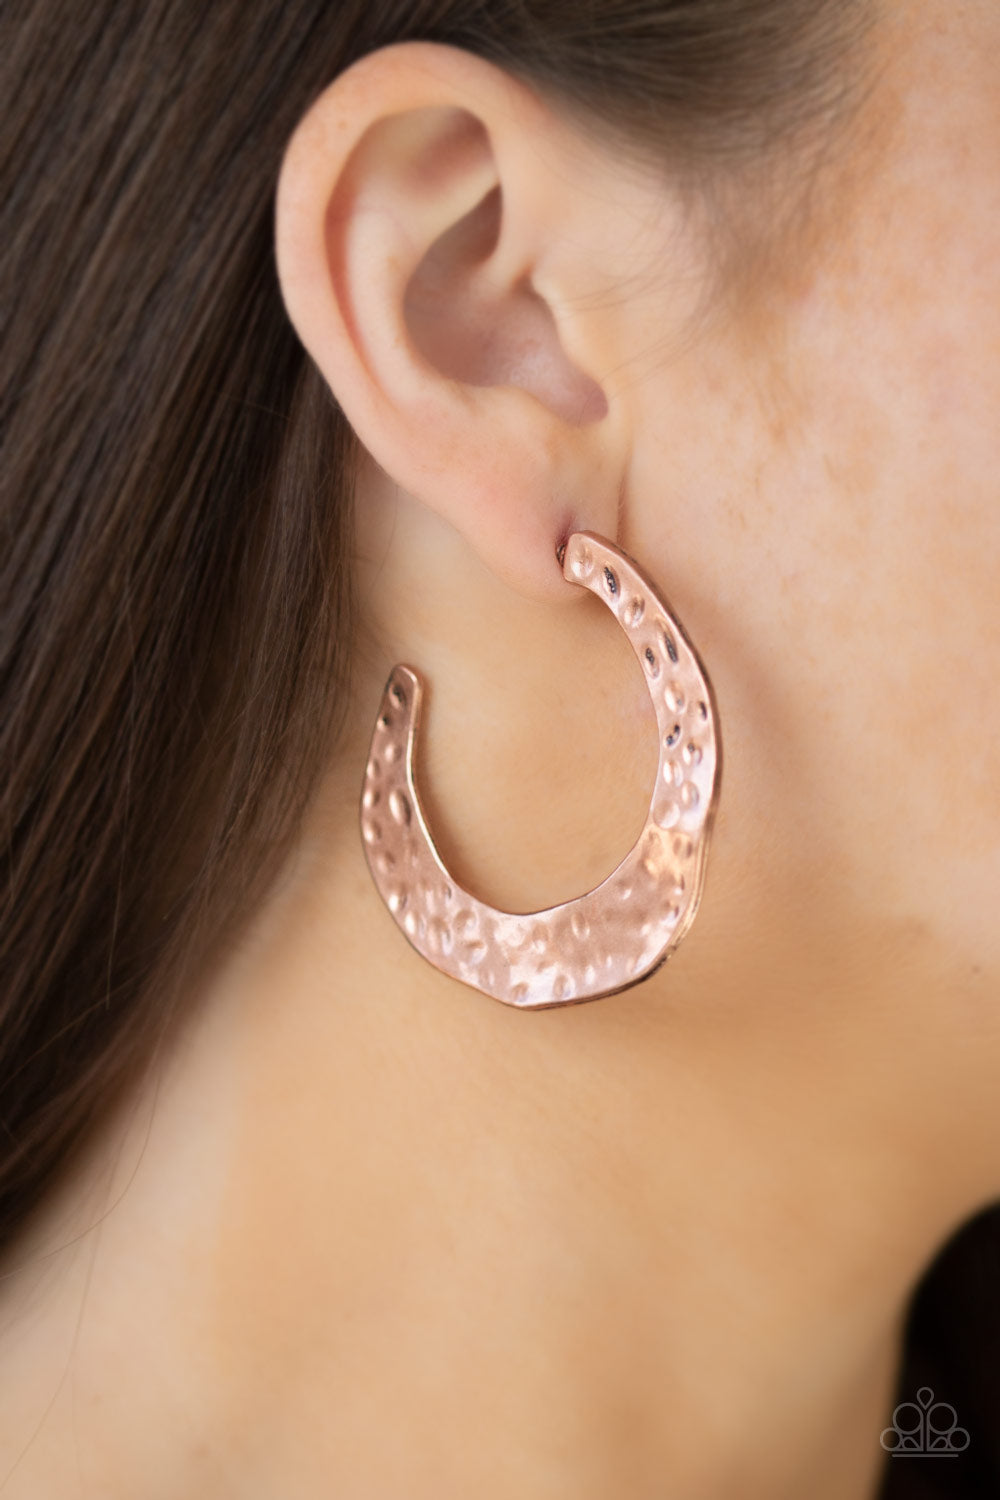 Earrings, Sensitive Ears, Sensitive Skin, Hypoallergenic Jewelry, copper, hammered metal, hoops